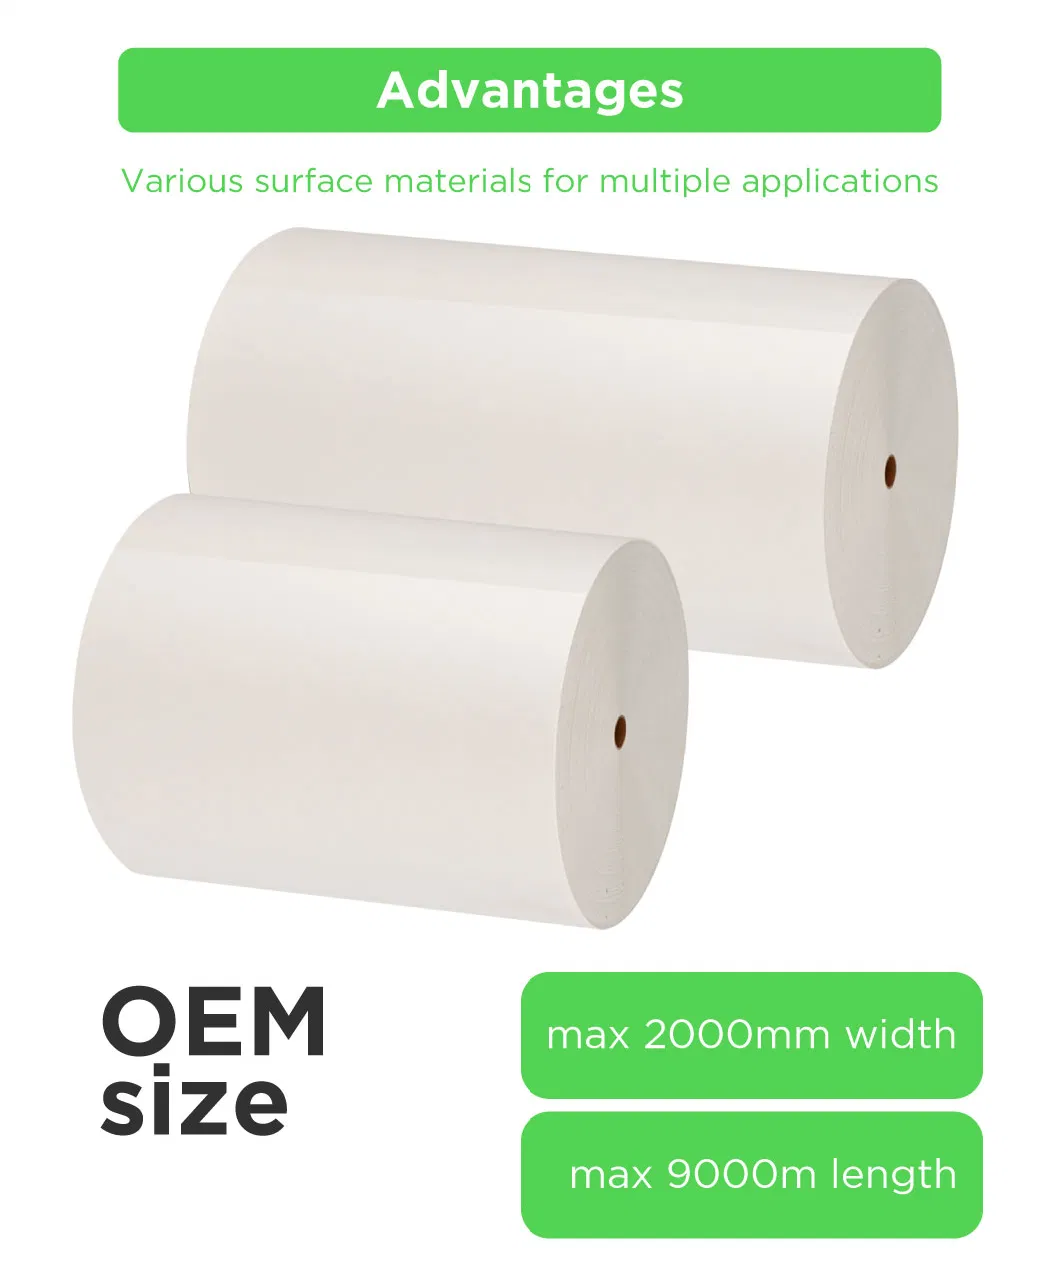 Self Adhesive 80gsm semi glossy paper china wholesale 2ml vial label